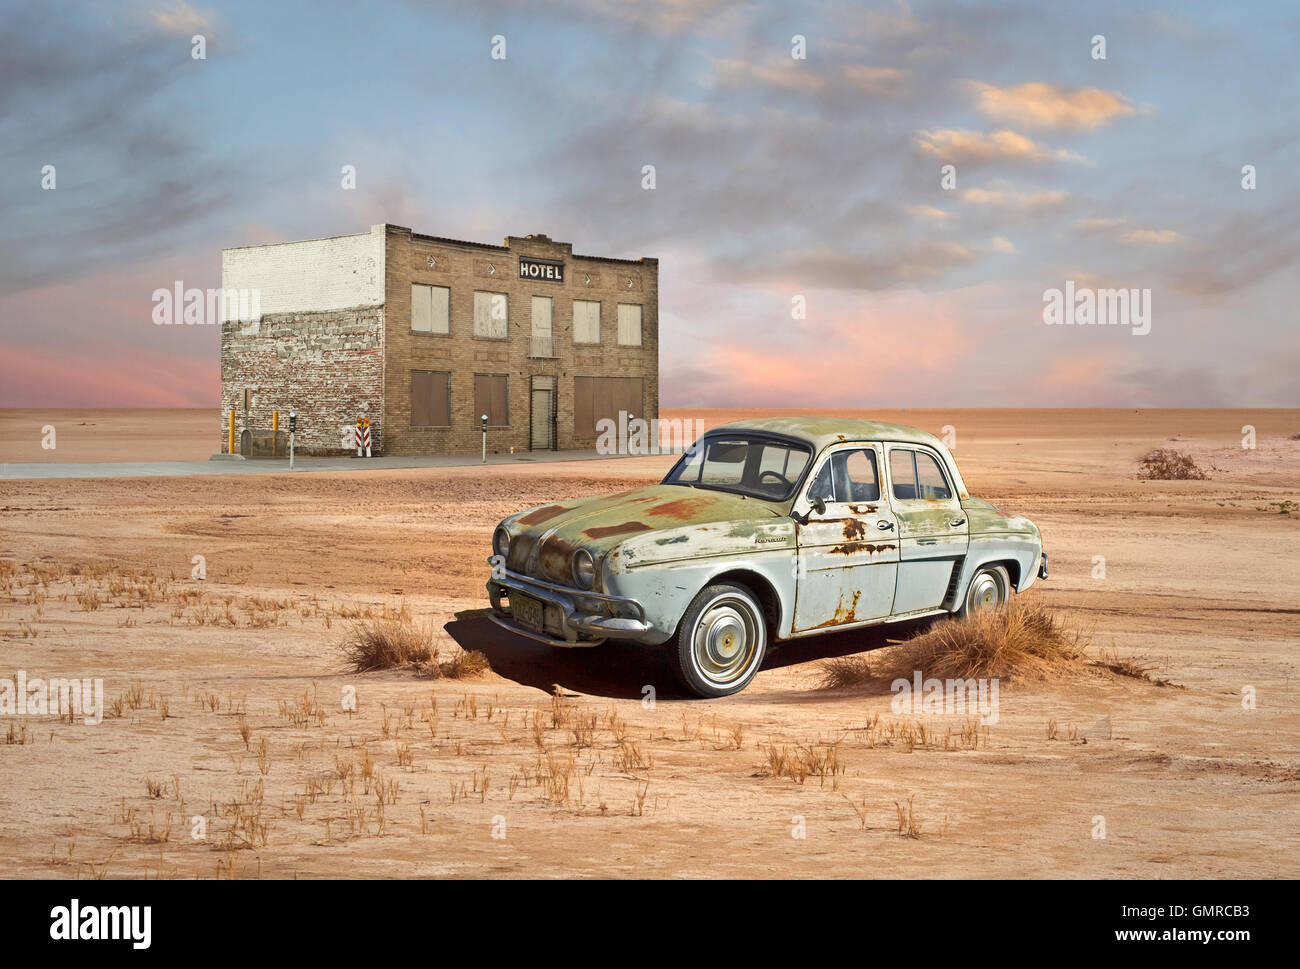 Retro Style Scene of vintage car and hotel in desert Stock Photo